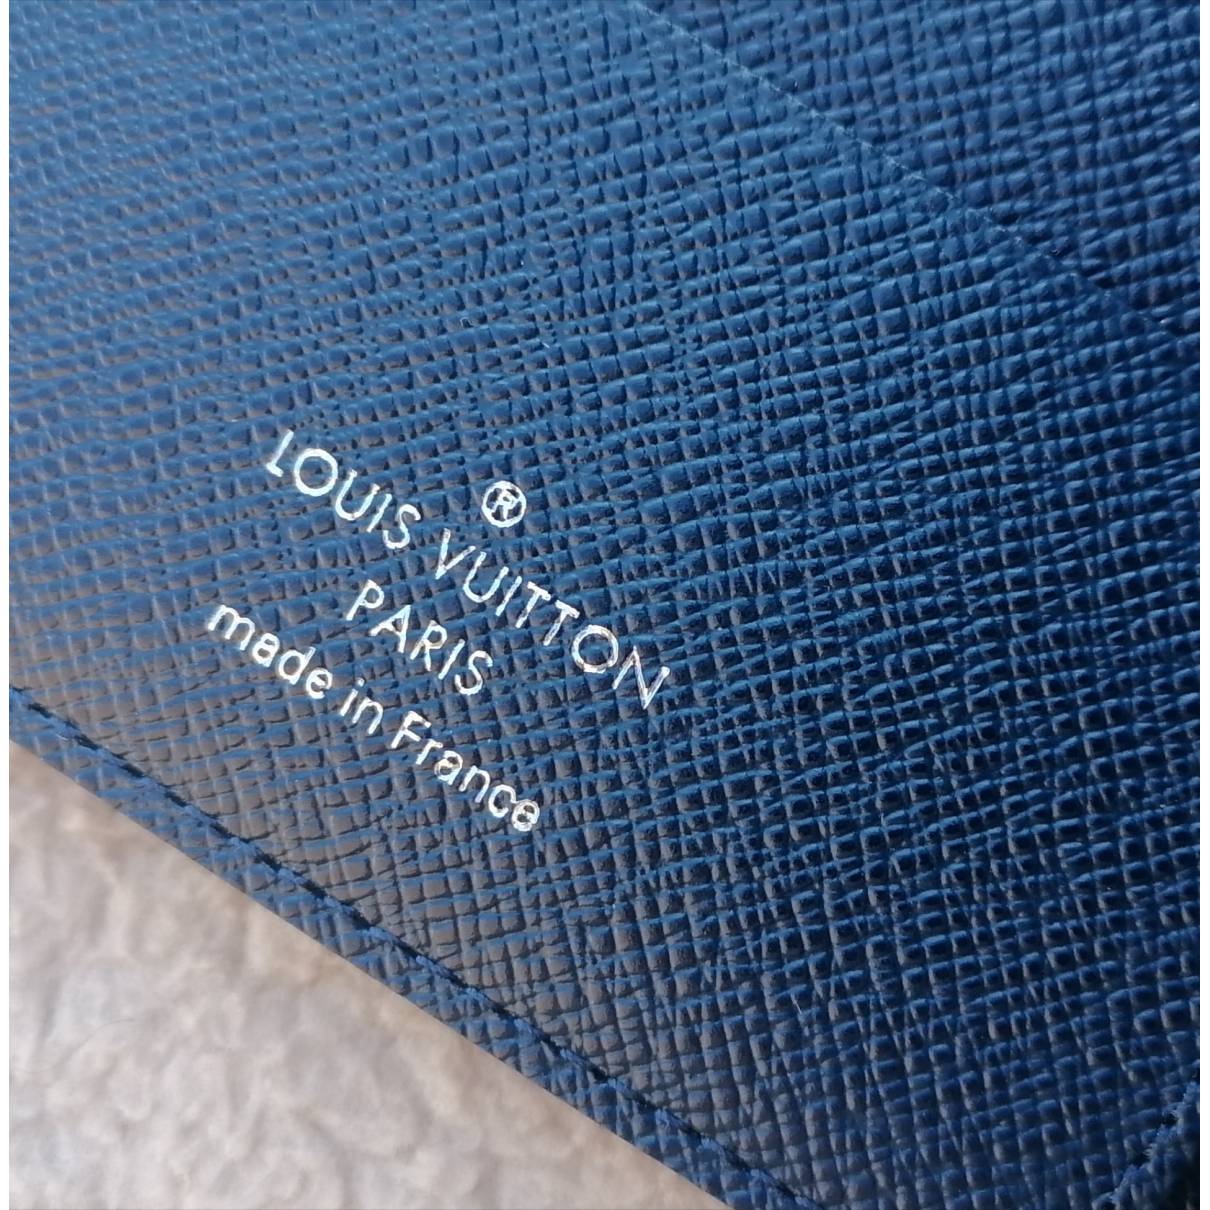 Louis Vuitton Passport Cases, Grey